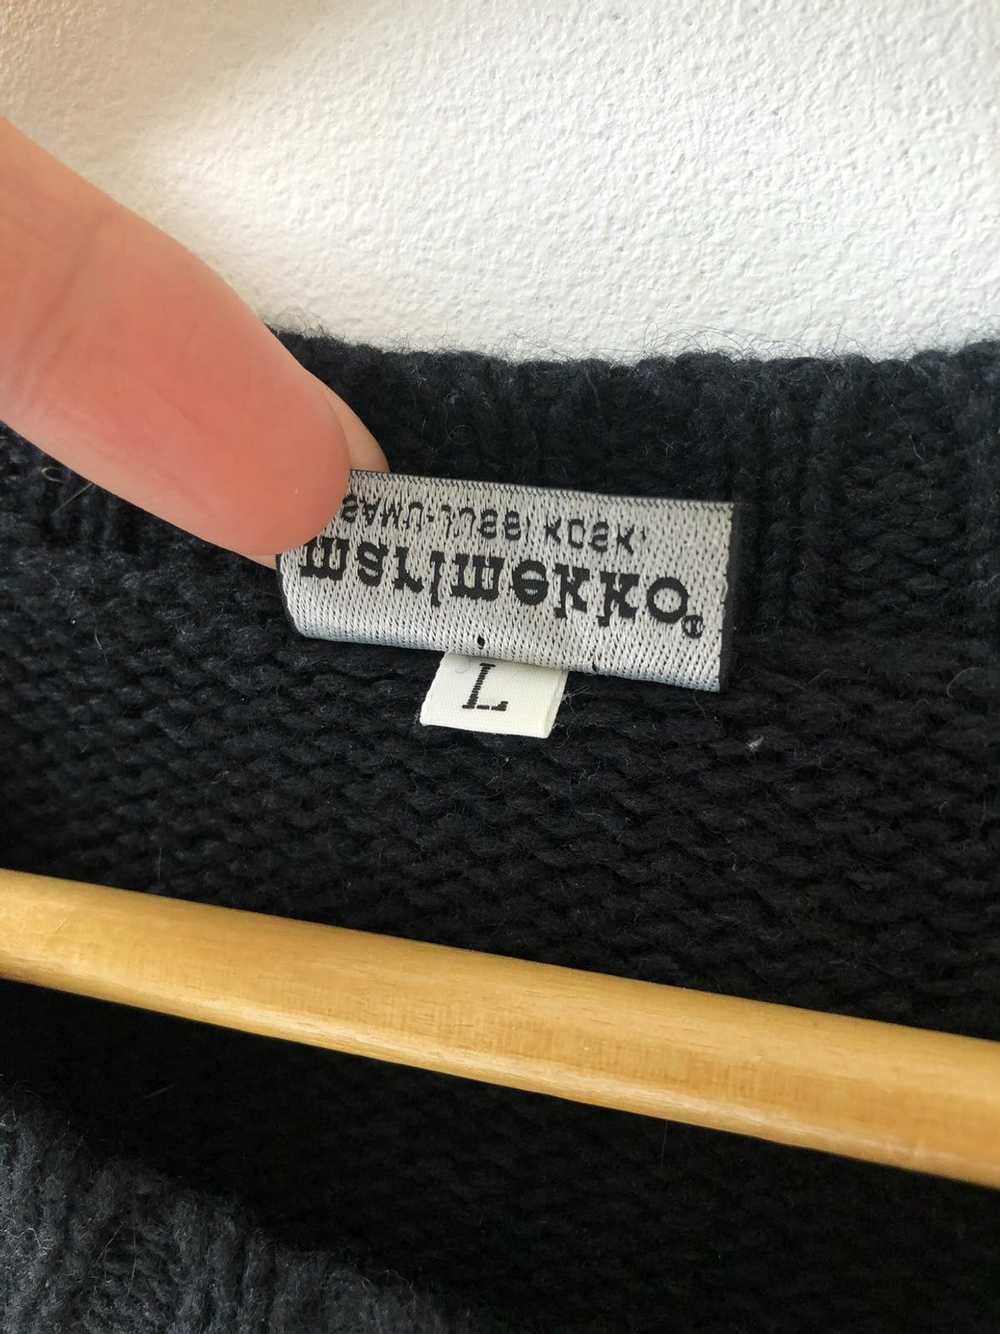 Marimekko Marimekko wool angora blend knit sweater - image 7